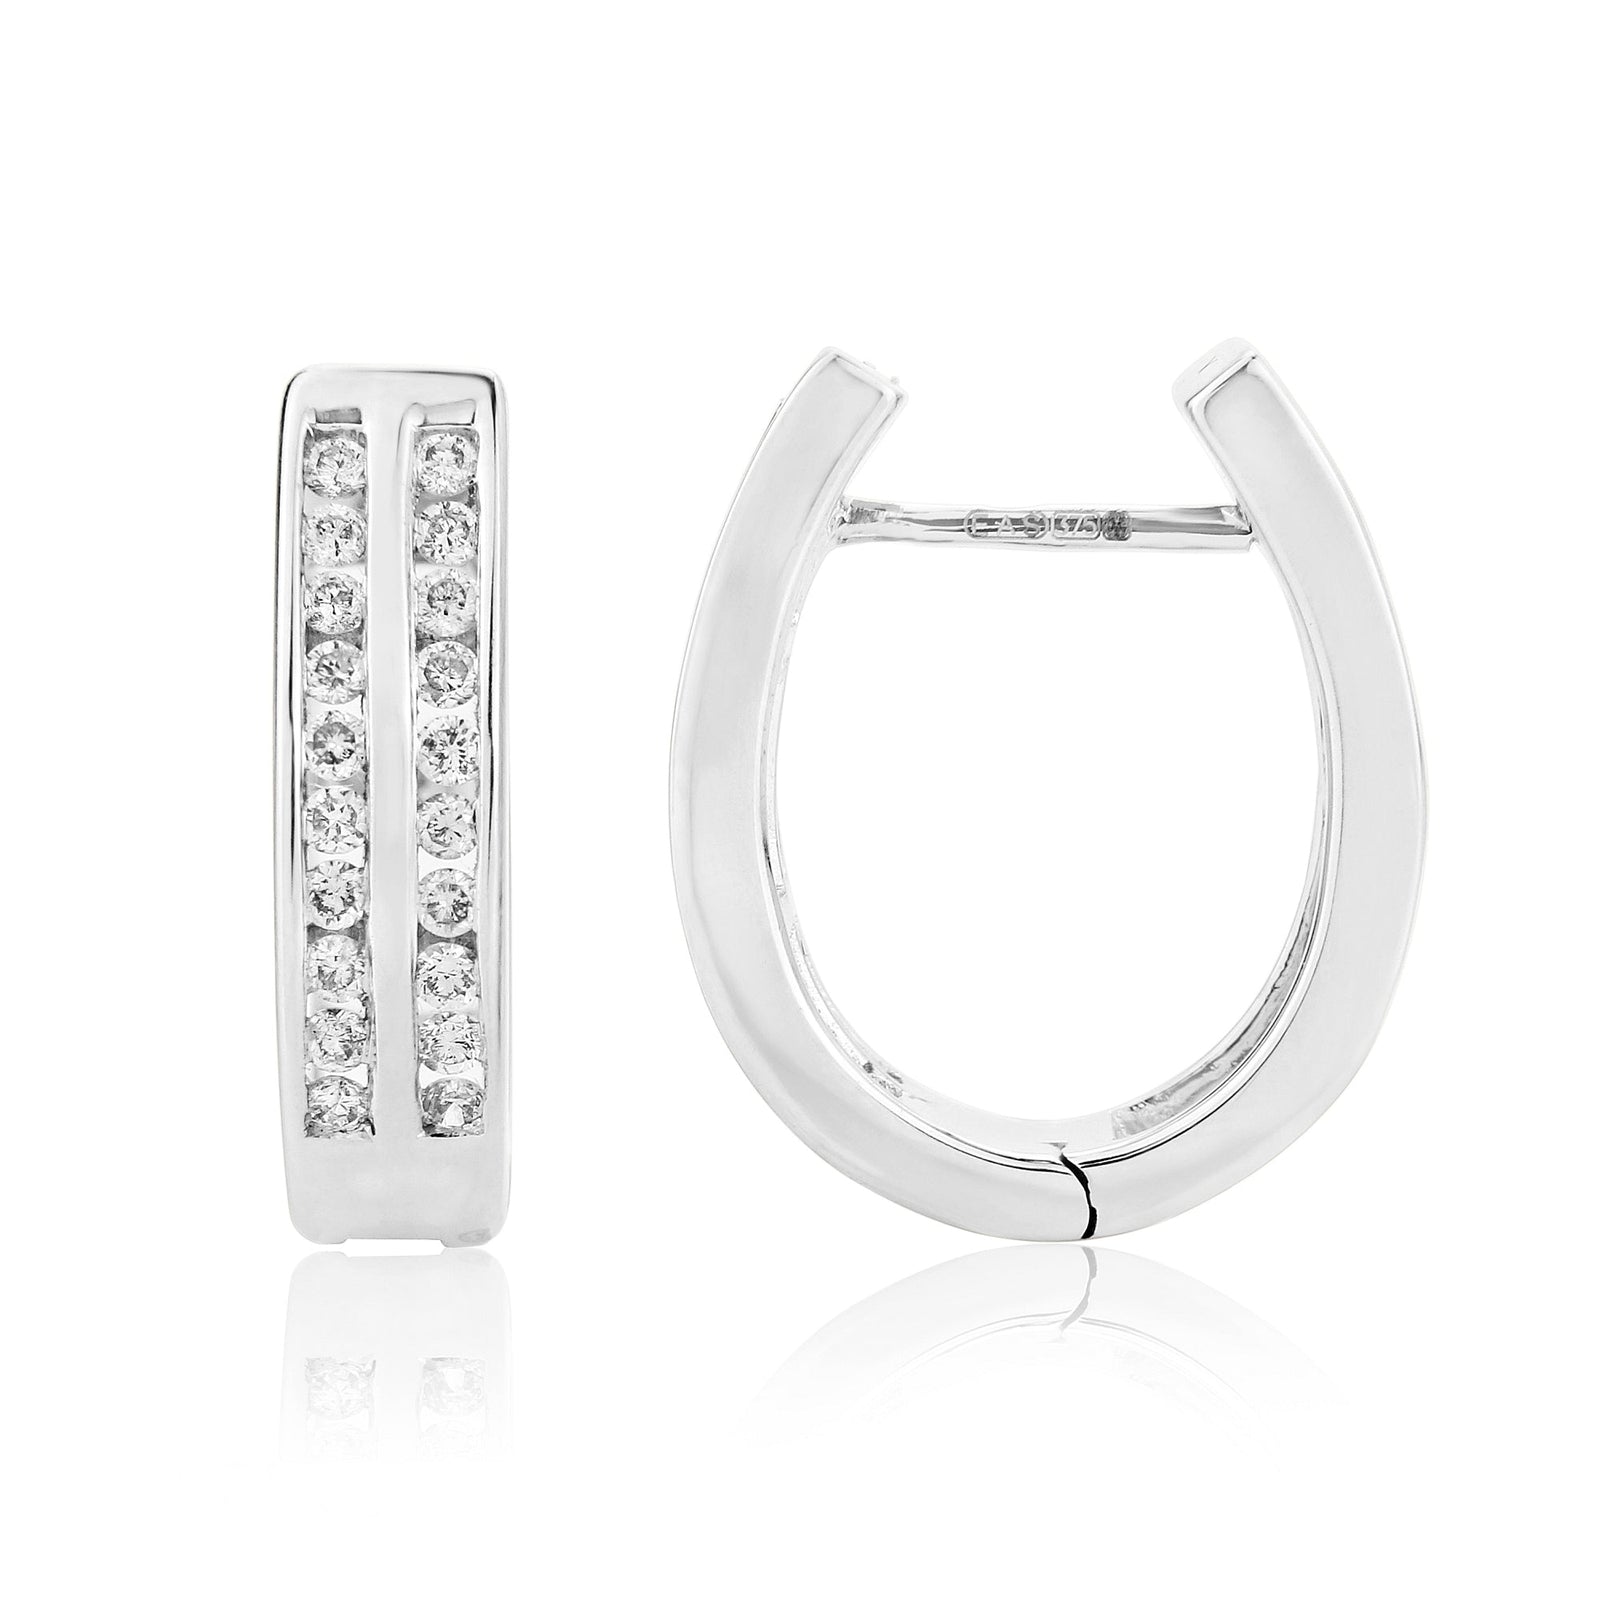 9ct white gold 2 row channel set diamond huggy earrings 0.39ct - W4.75 x L17.5mm